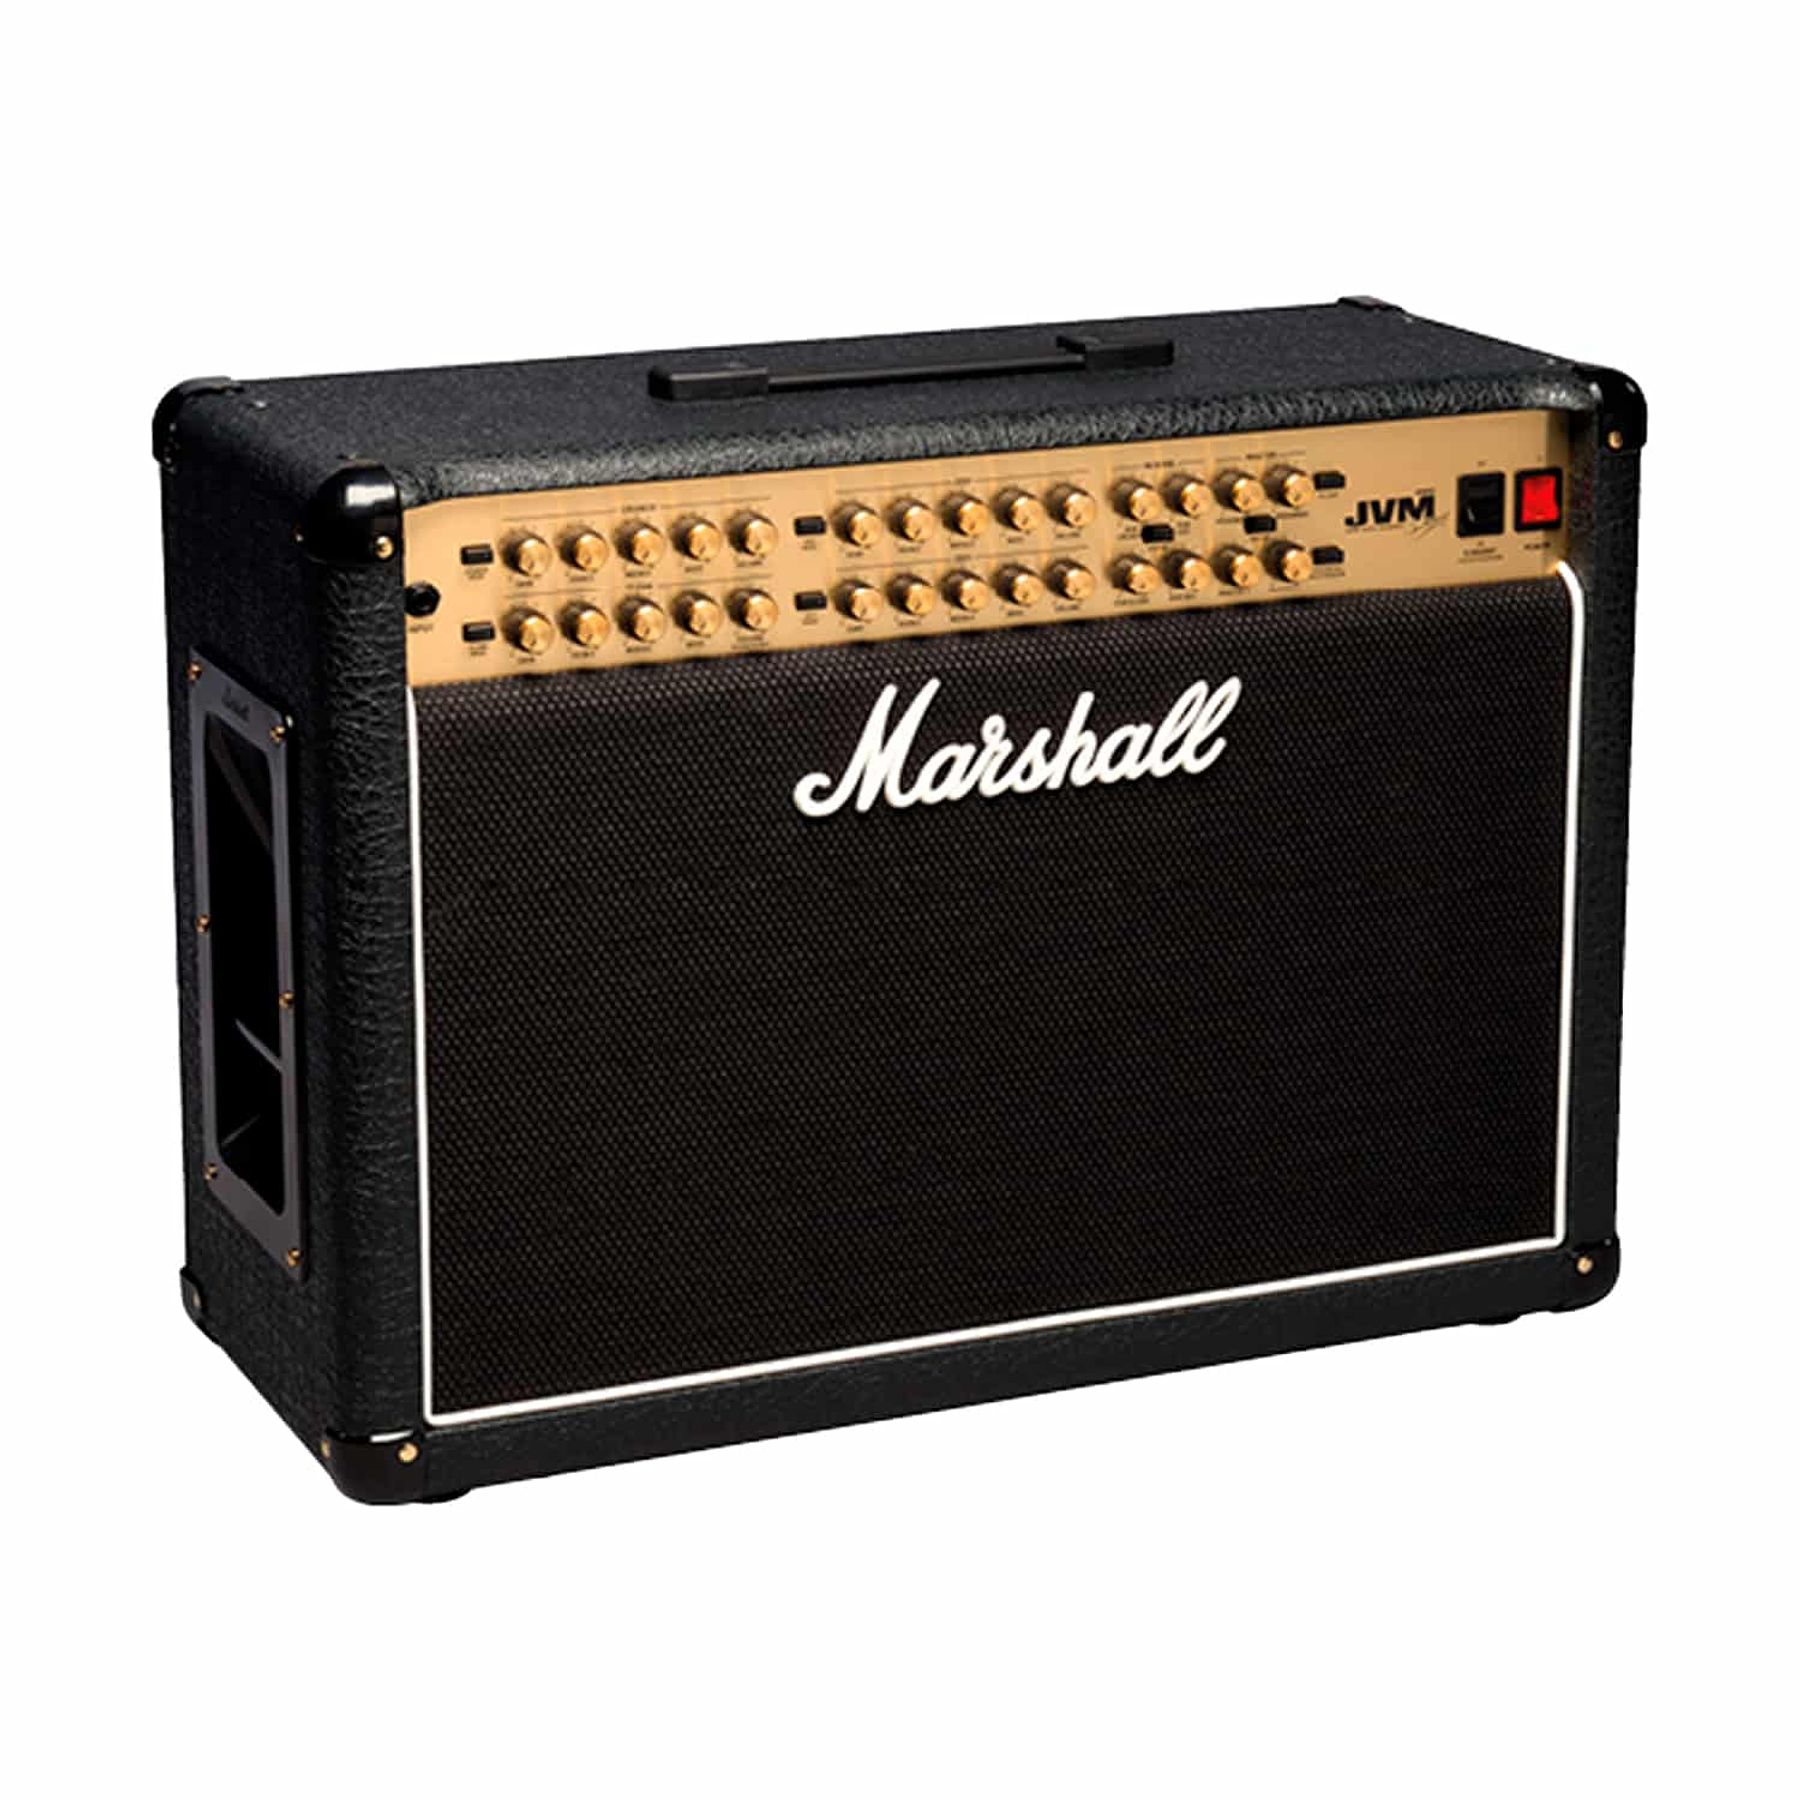 Amplificador Guitarra Eléctrica JVM410C Marshall